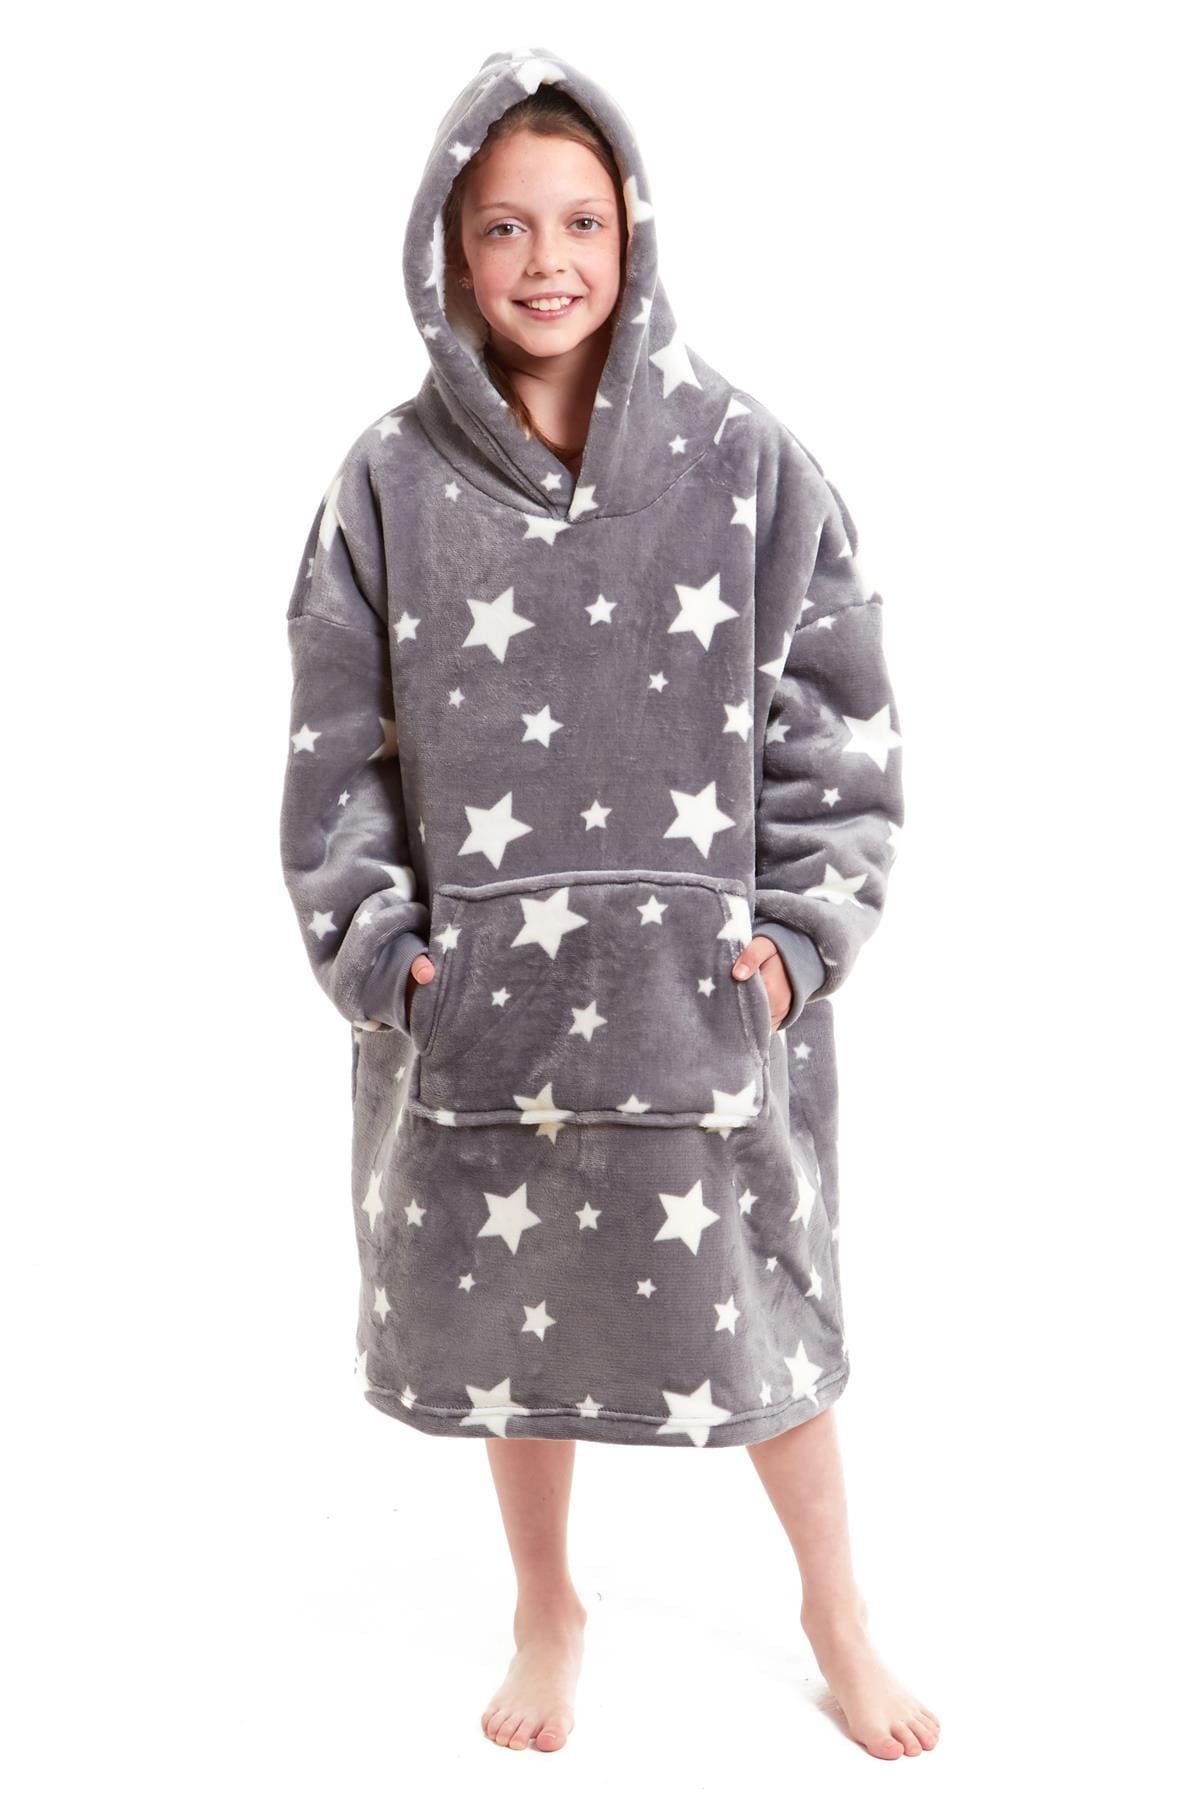 Kids Oversized Hooded Plush Fleece Blankets With Reversible Sherpa STARS OLIVIA ROCCO Hooded Blanket